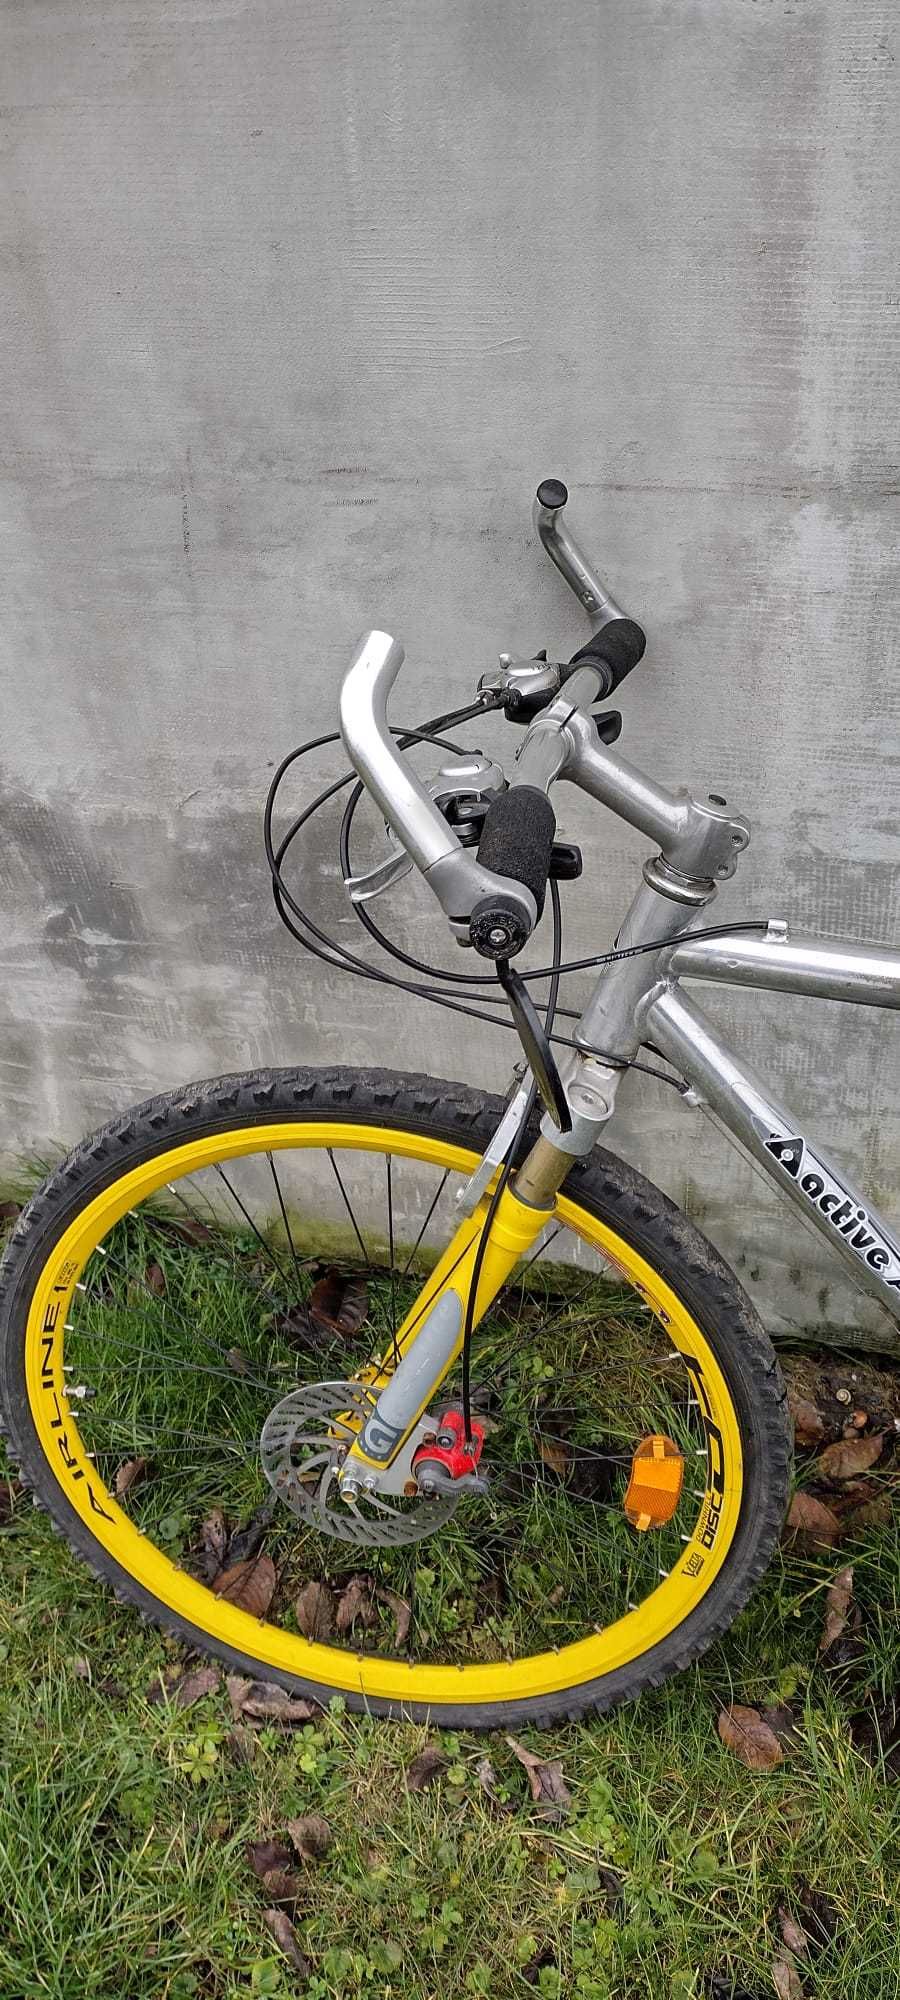 Rower aluminiowy Ital Bike